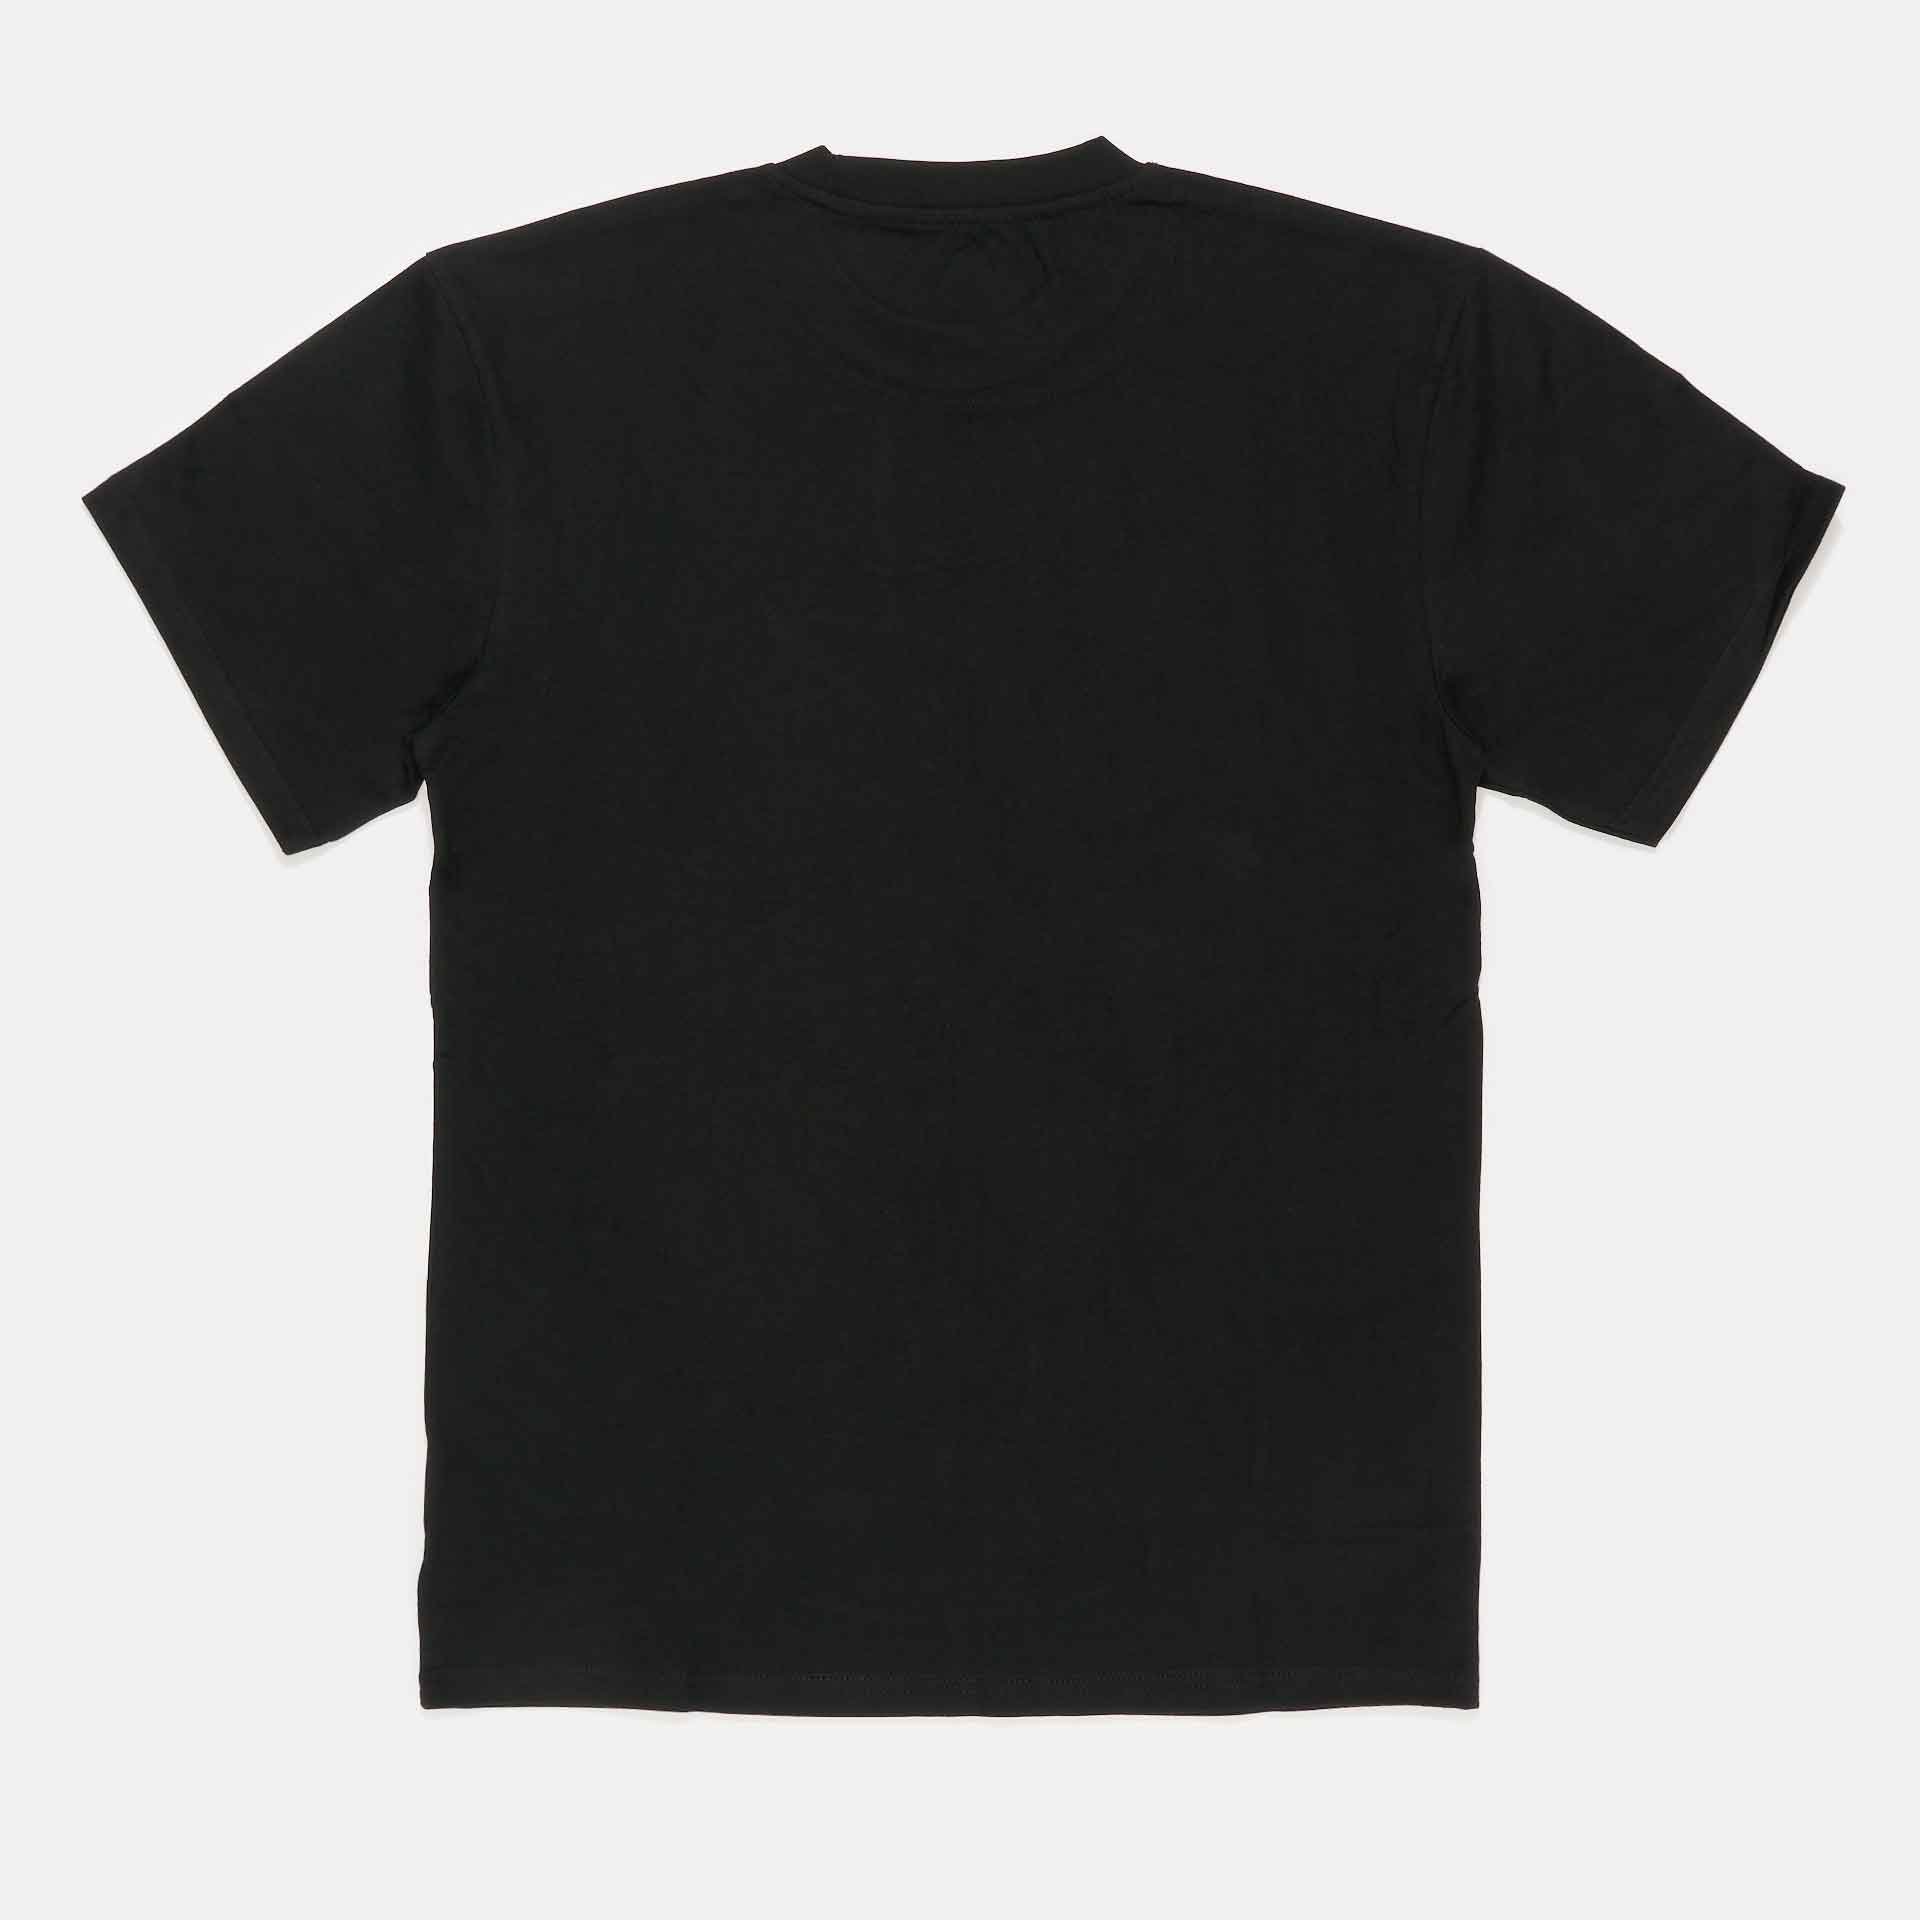 Karl Kani Small Signature T-Shirt Black/White